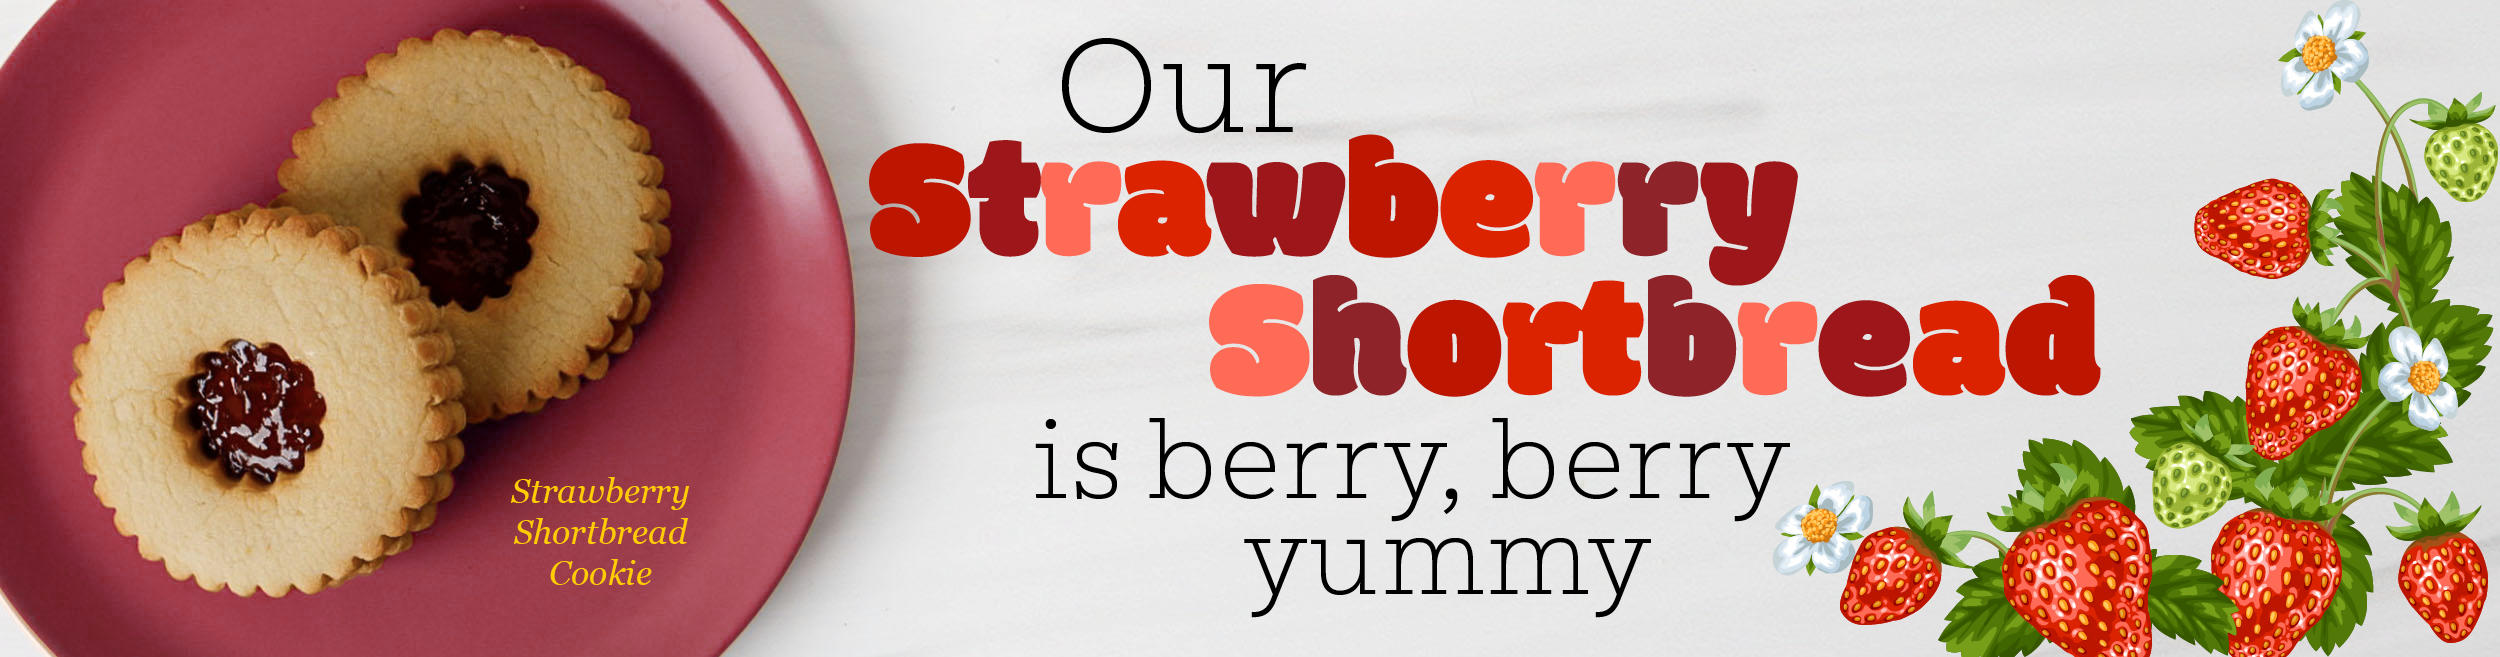 StrawberryShortbread_2